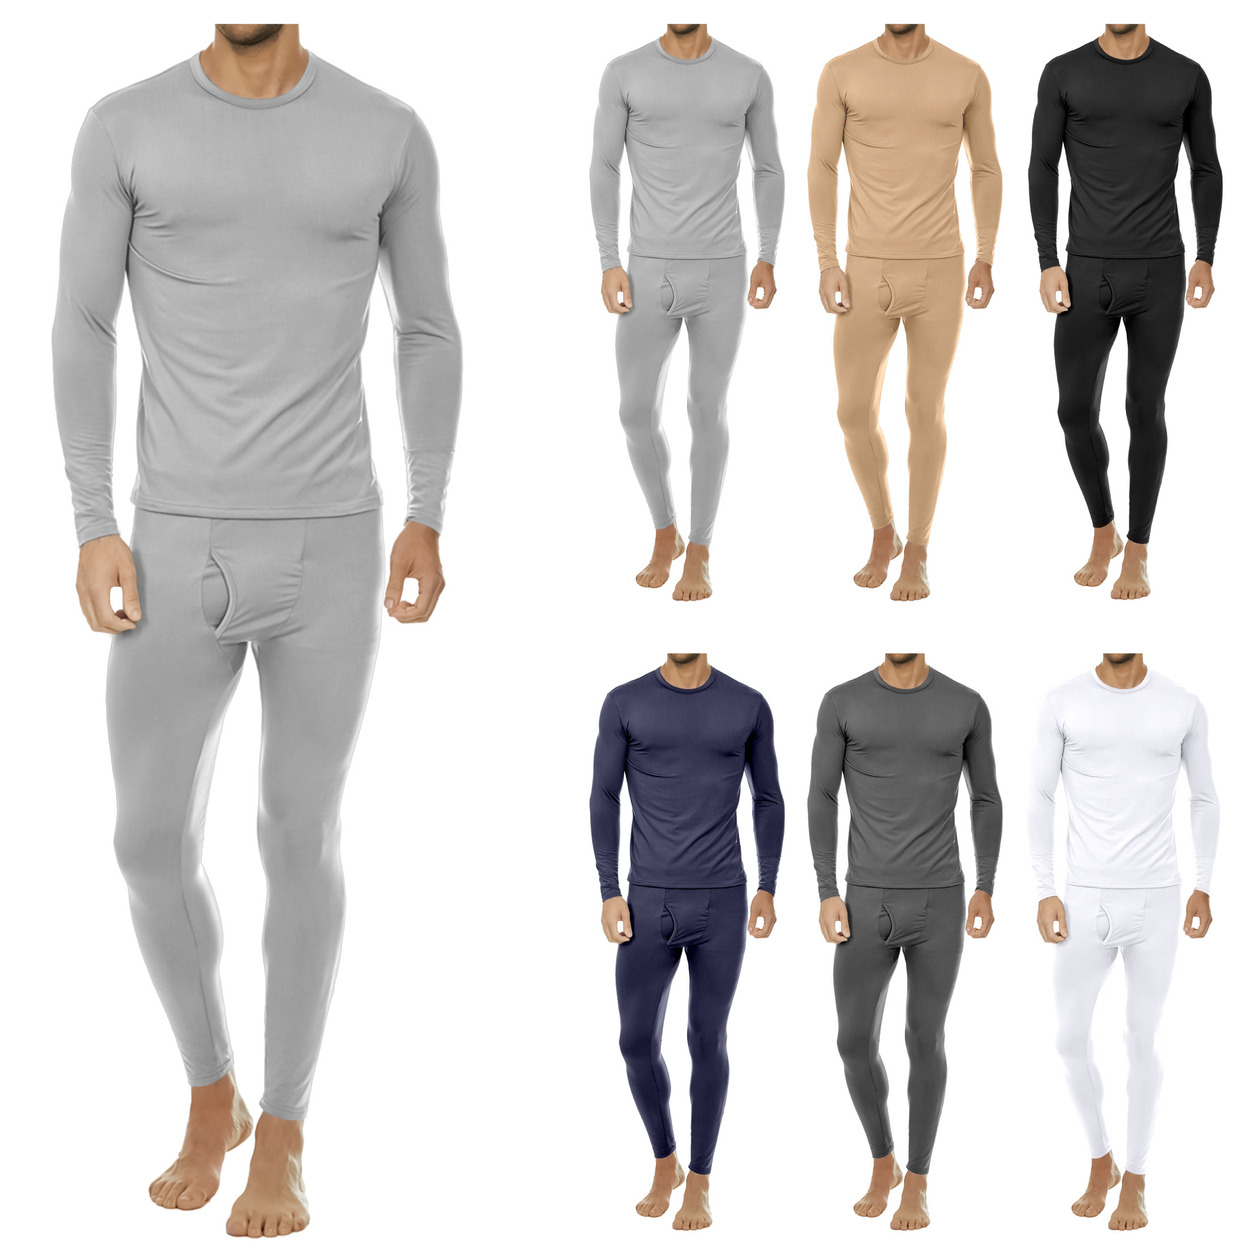 2-Sets: Men's Winter Warm Fleece Lined Thermal Underwear Set For Cold Weather - Grey&grey, Medium